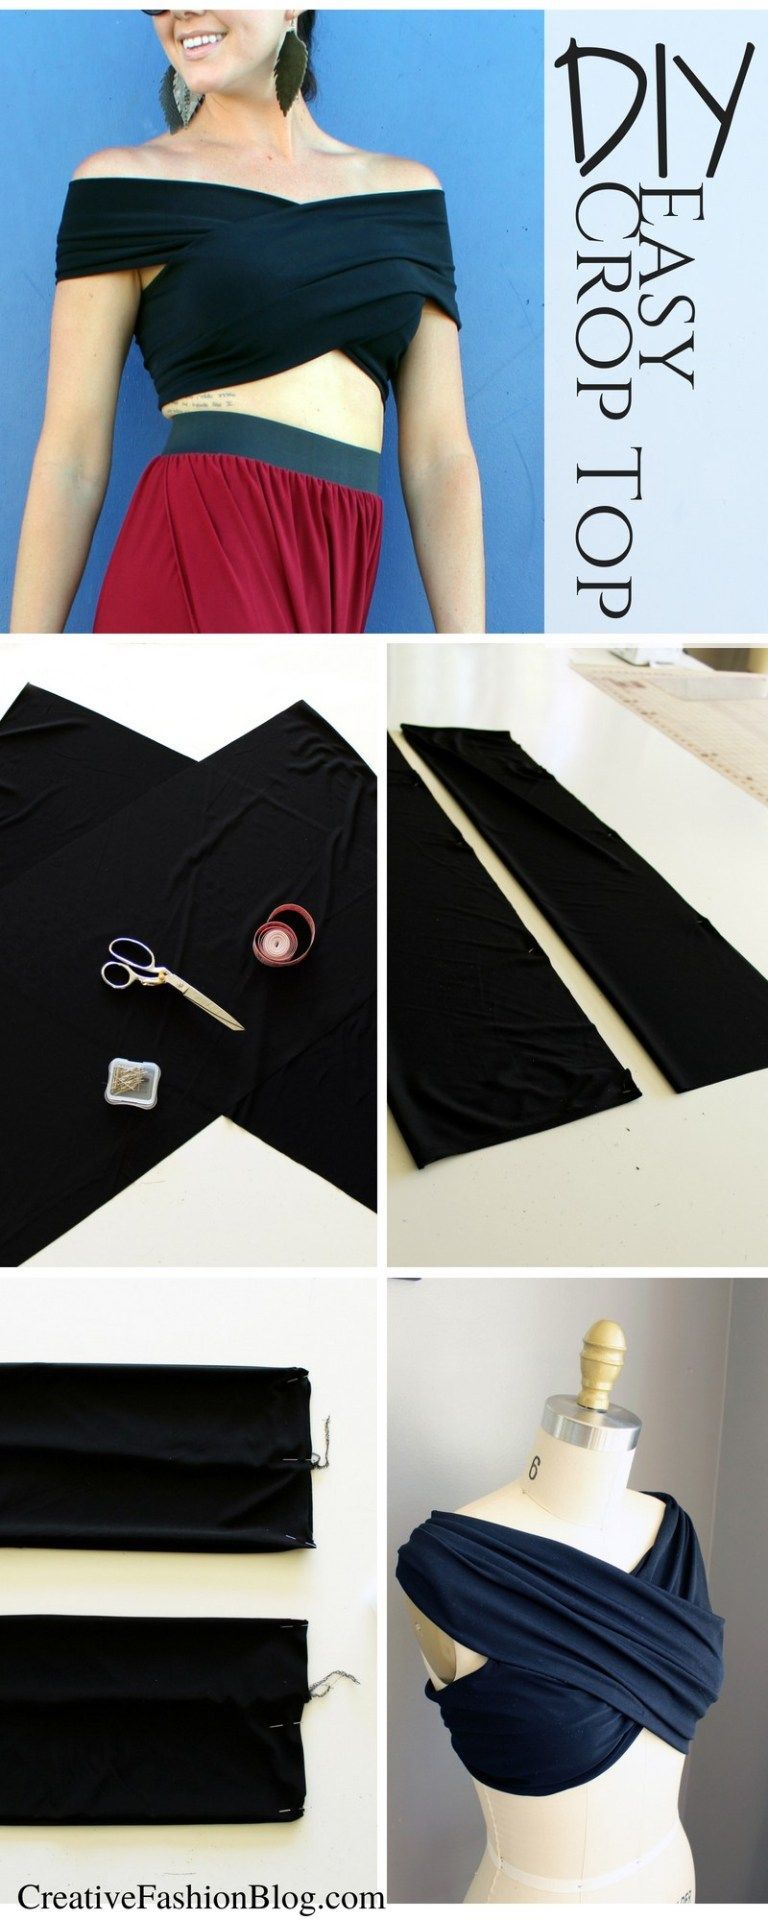 How To Sew An Easy Summer DIY Crop Top - Creative Fashion Blog -   13 DIY Clothes Tshirt criss cross ideas